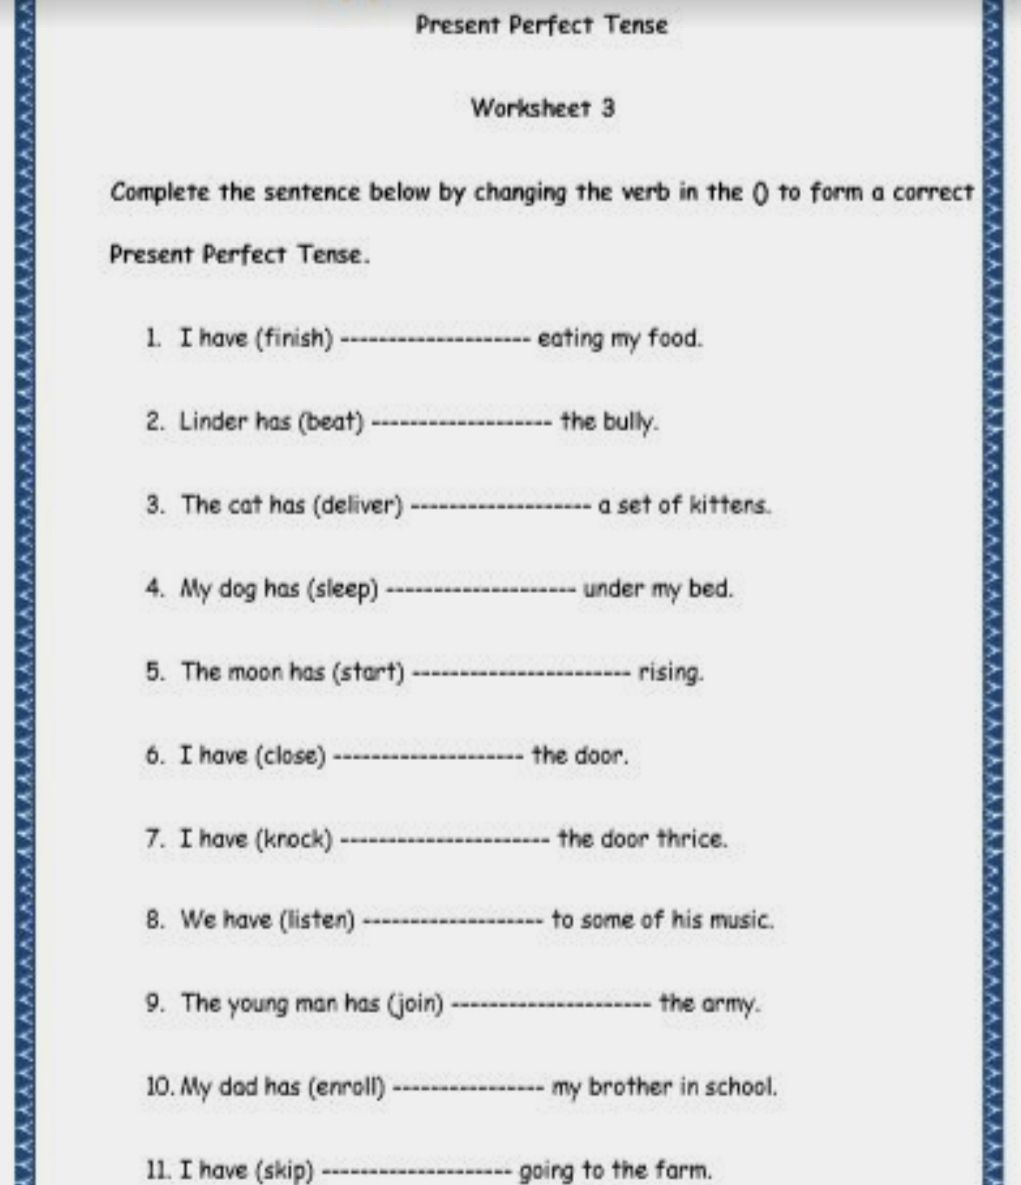 Present Perfect Tense Worksheet English Assignment Teachmint